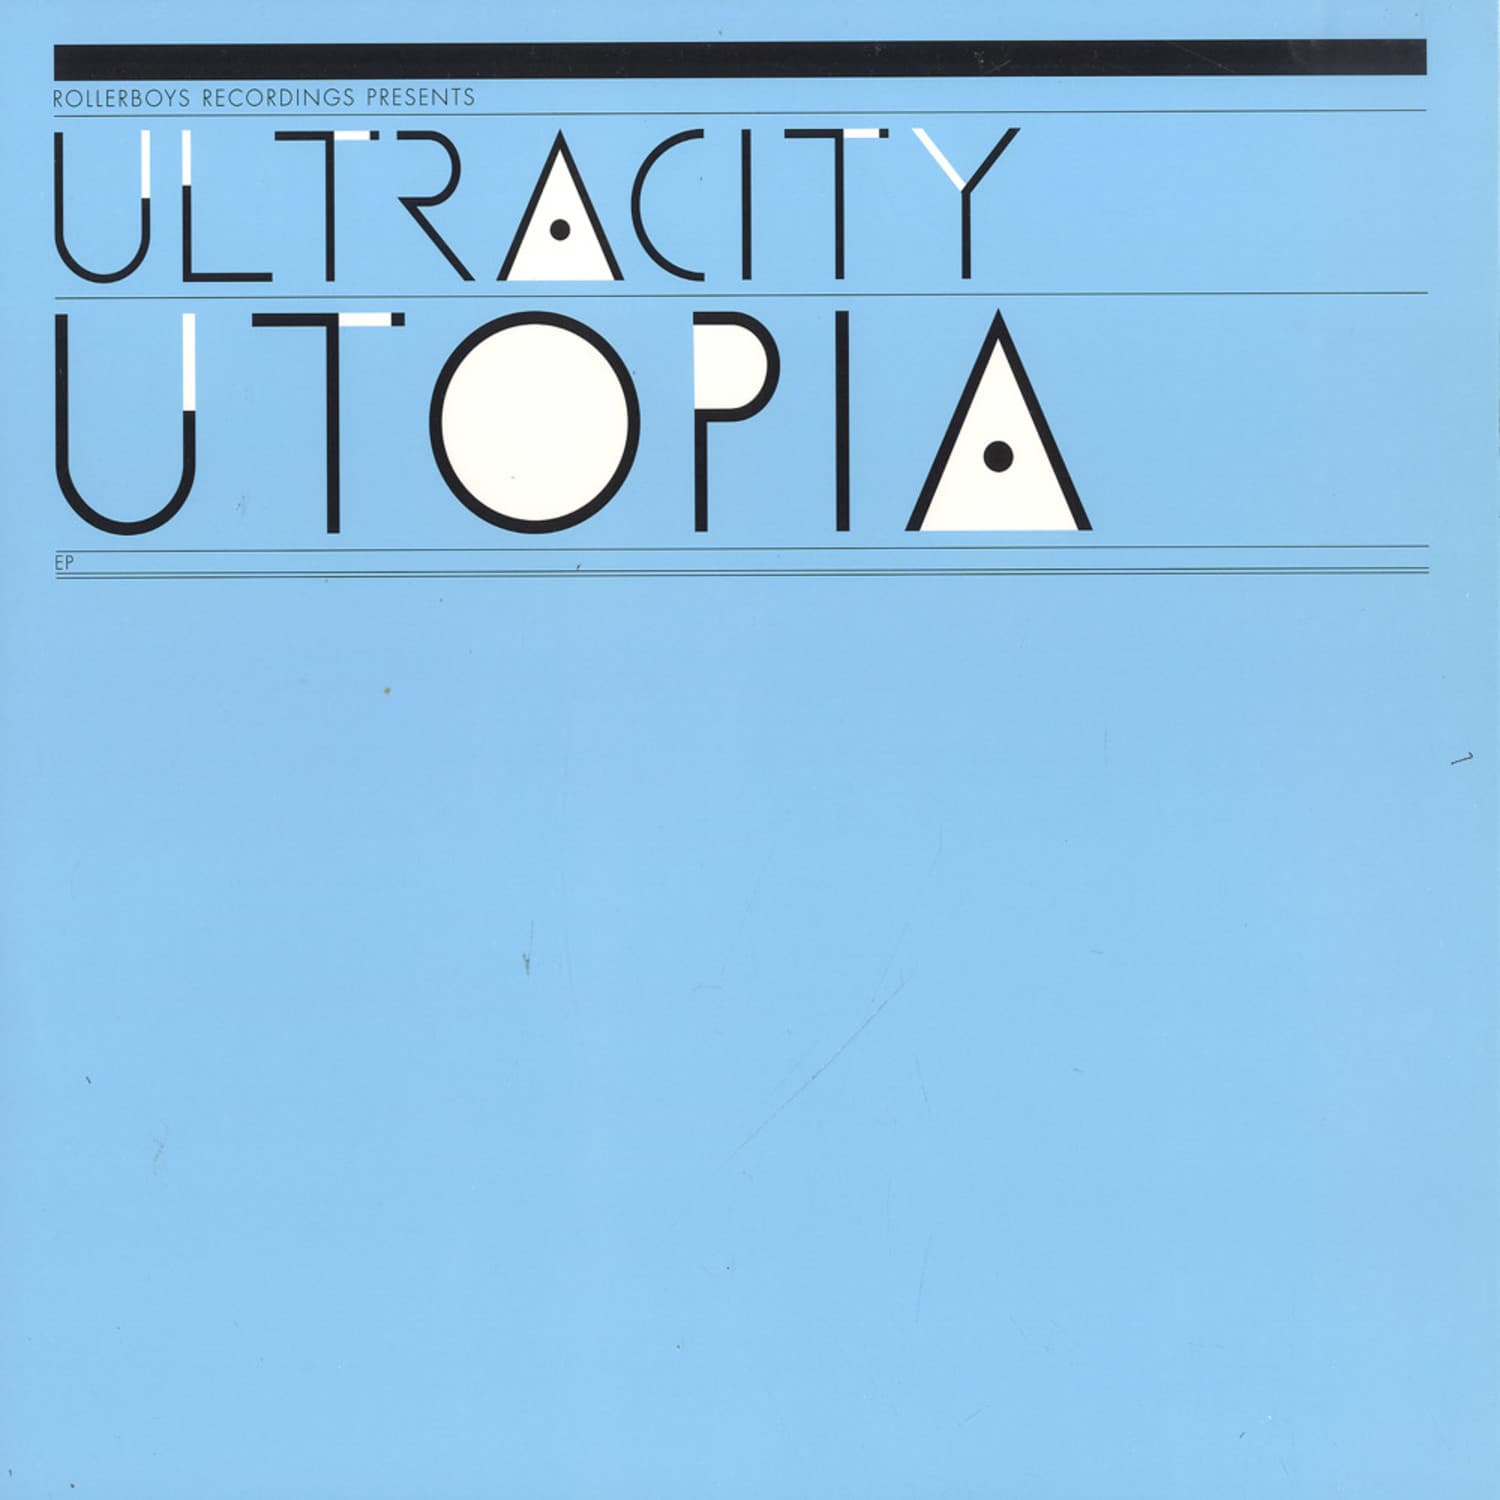 Ultracity - UTOPIA